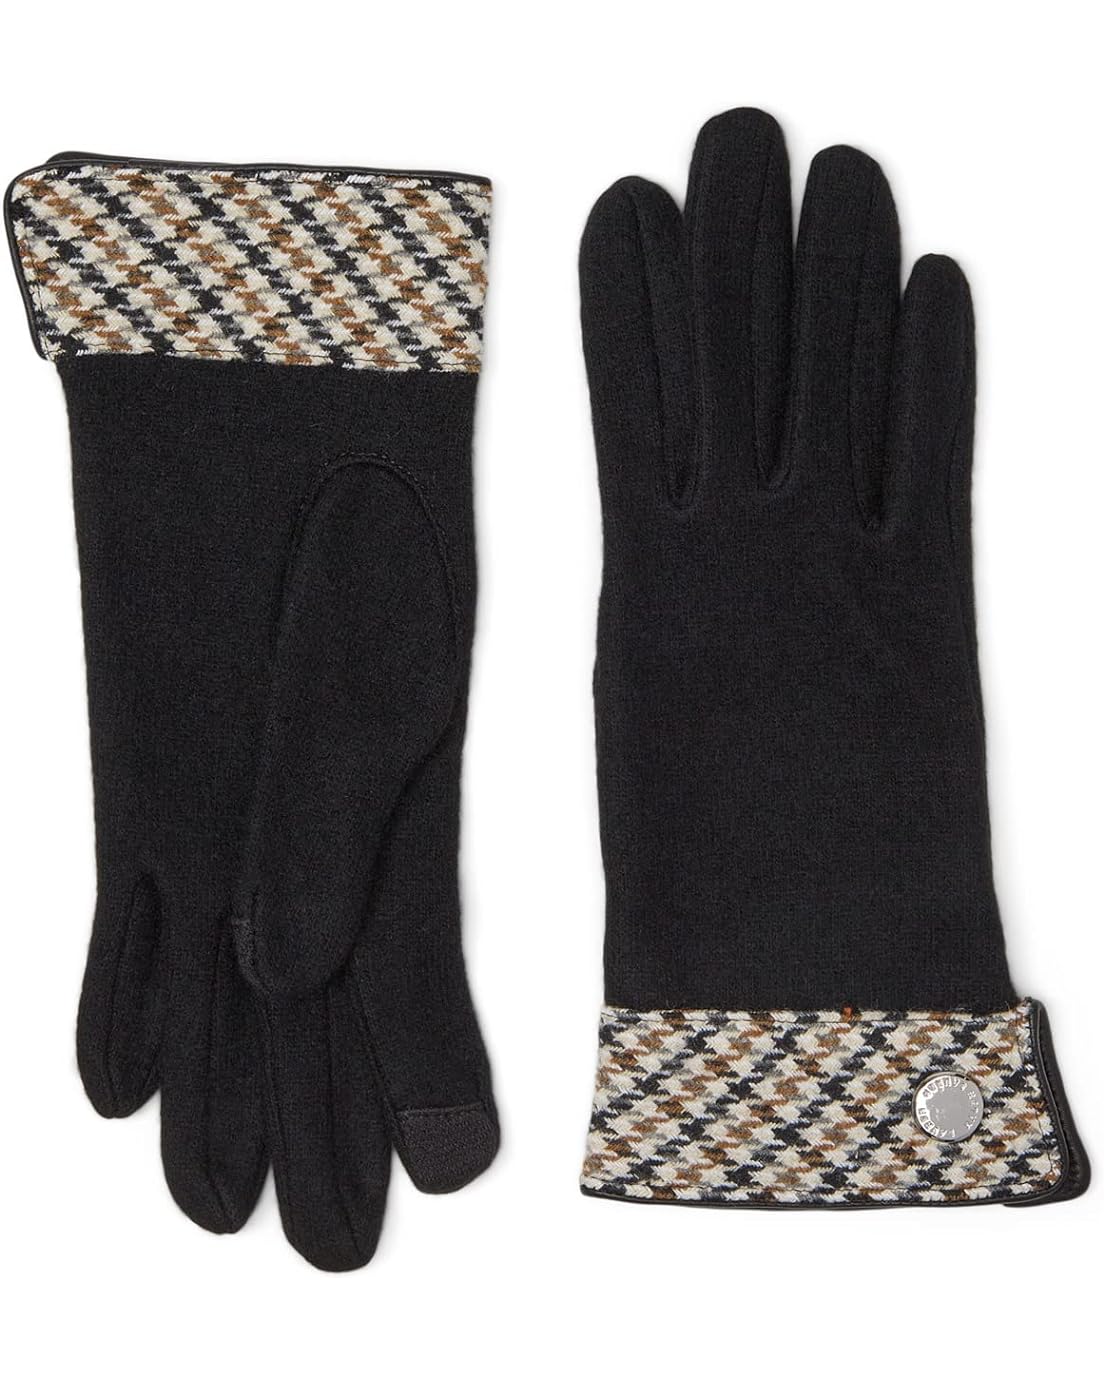 LAUREN Ralph Lauren Check Cuff Knit Touch Gloves